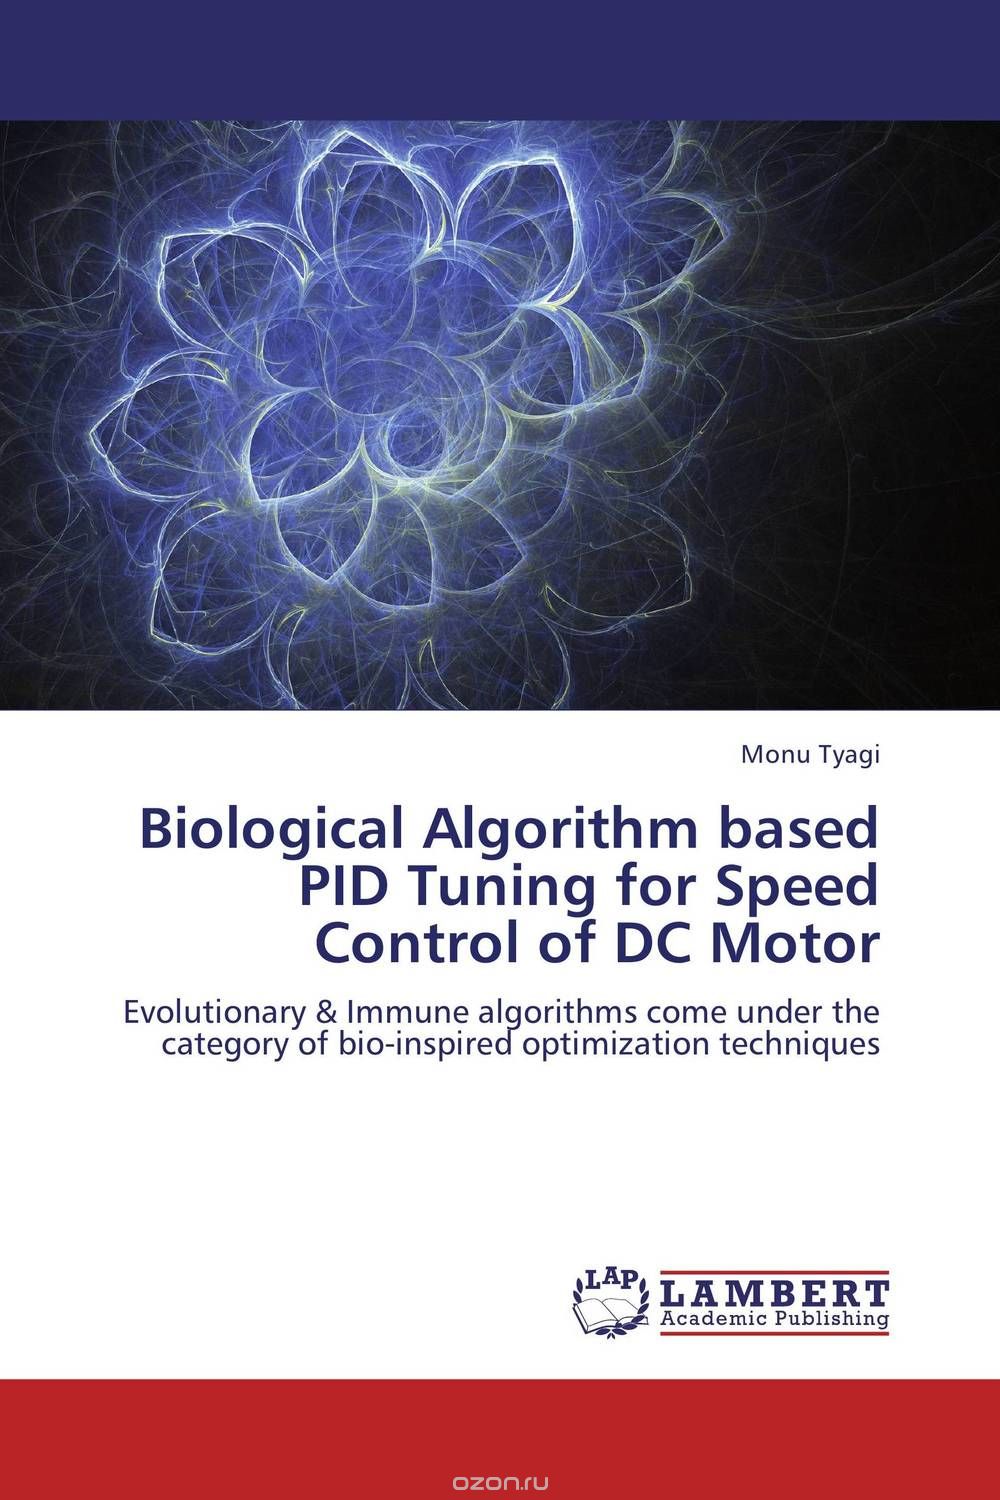 Скачать книгу "Biological Algorithm based PID Tuning for Speed Control of DC Motor"